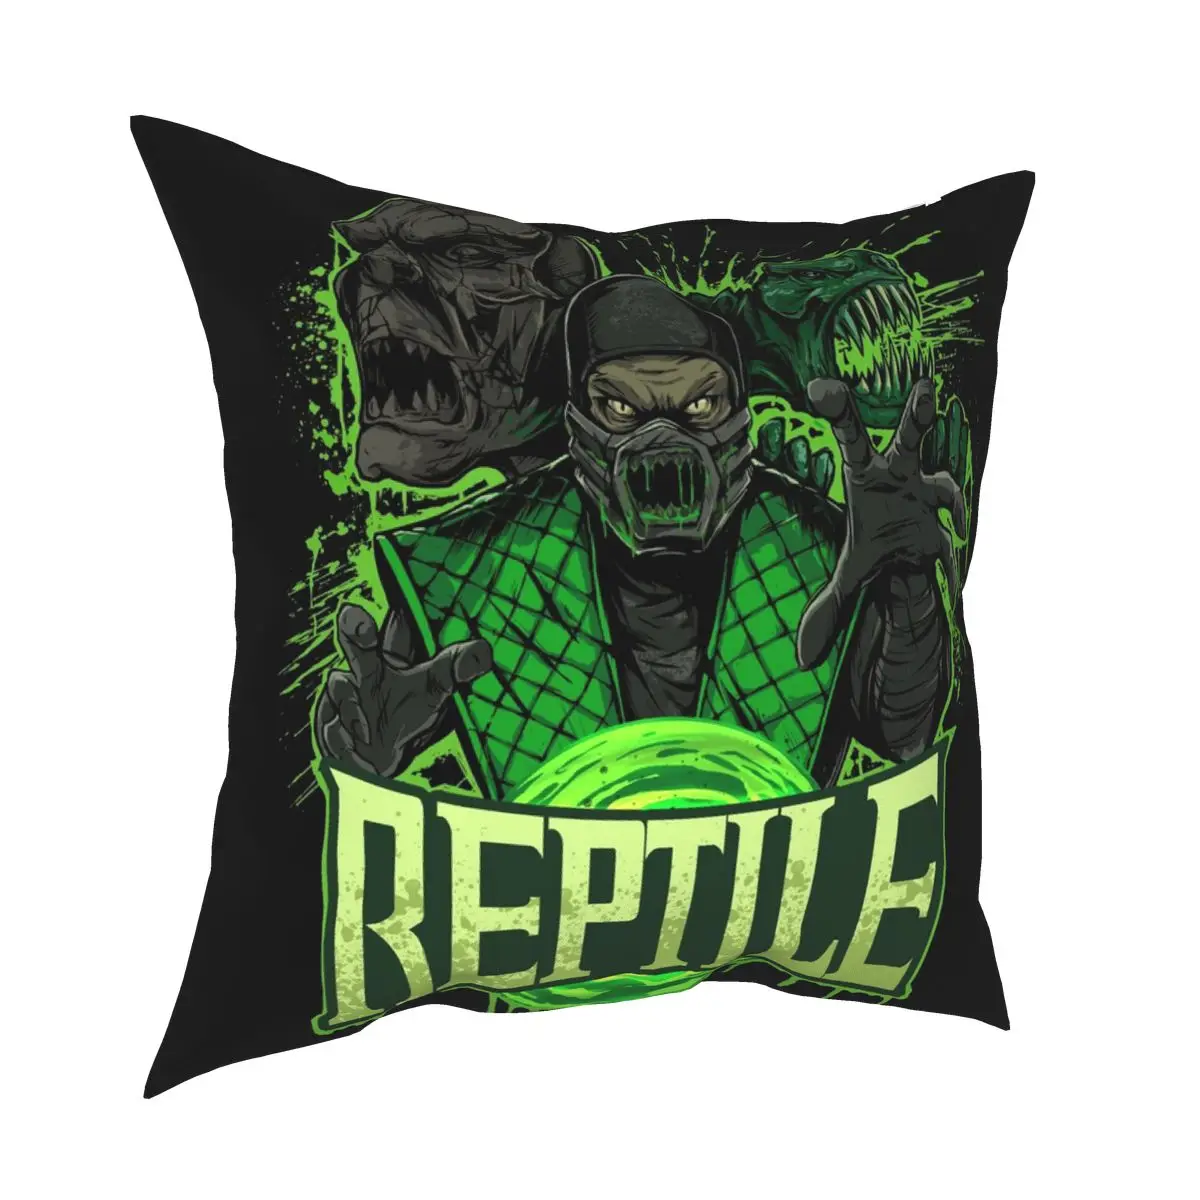 

Reptile Square Pillow Cases Mortal Kombat Mk11 Fighting Game Cushion Cover Creative Zipper Decor Pillowcase for Home 40x40cm